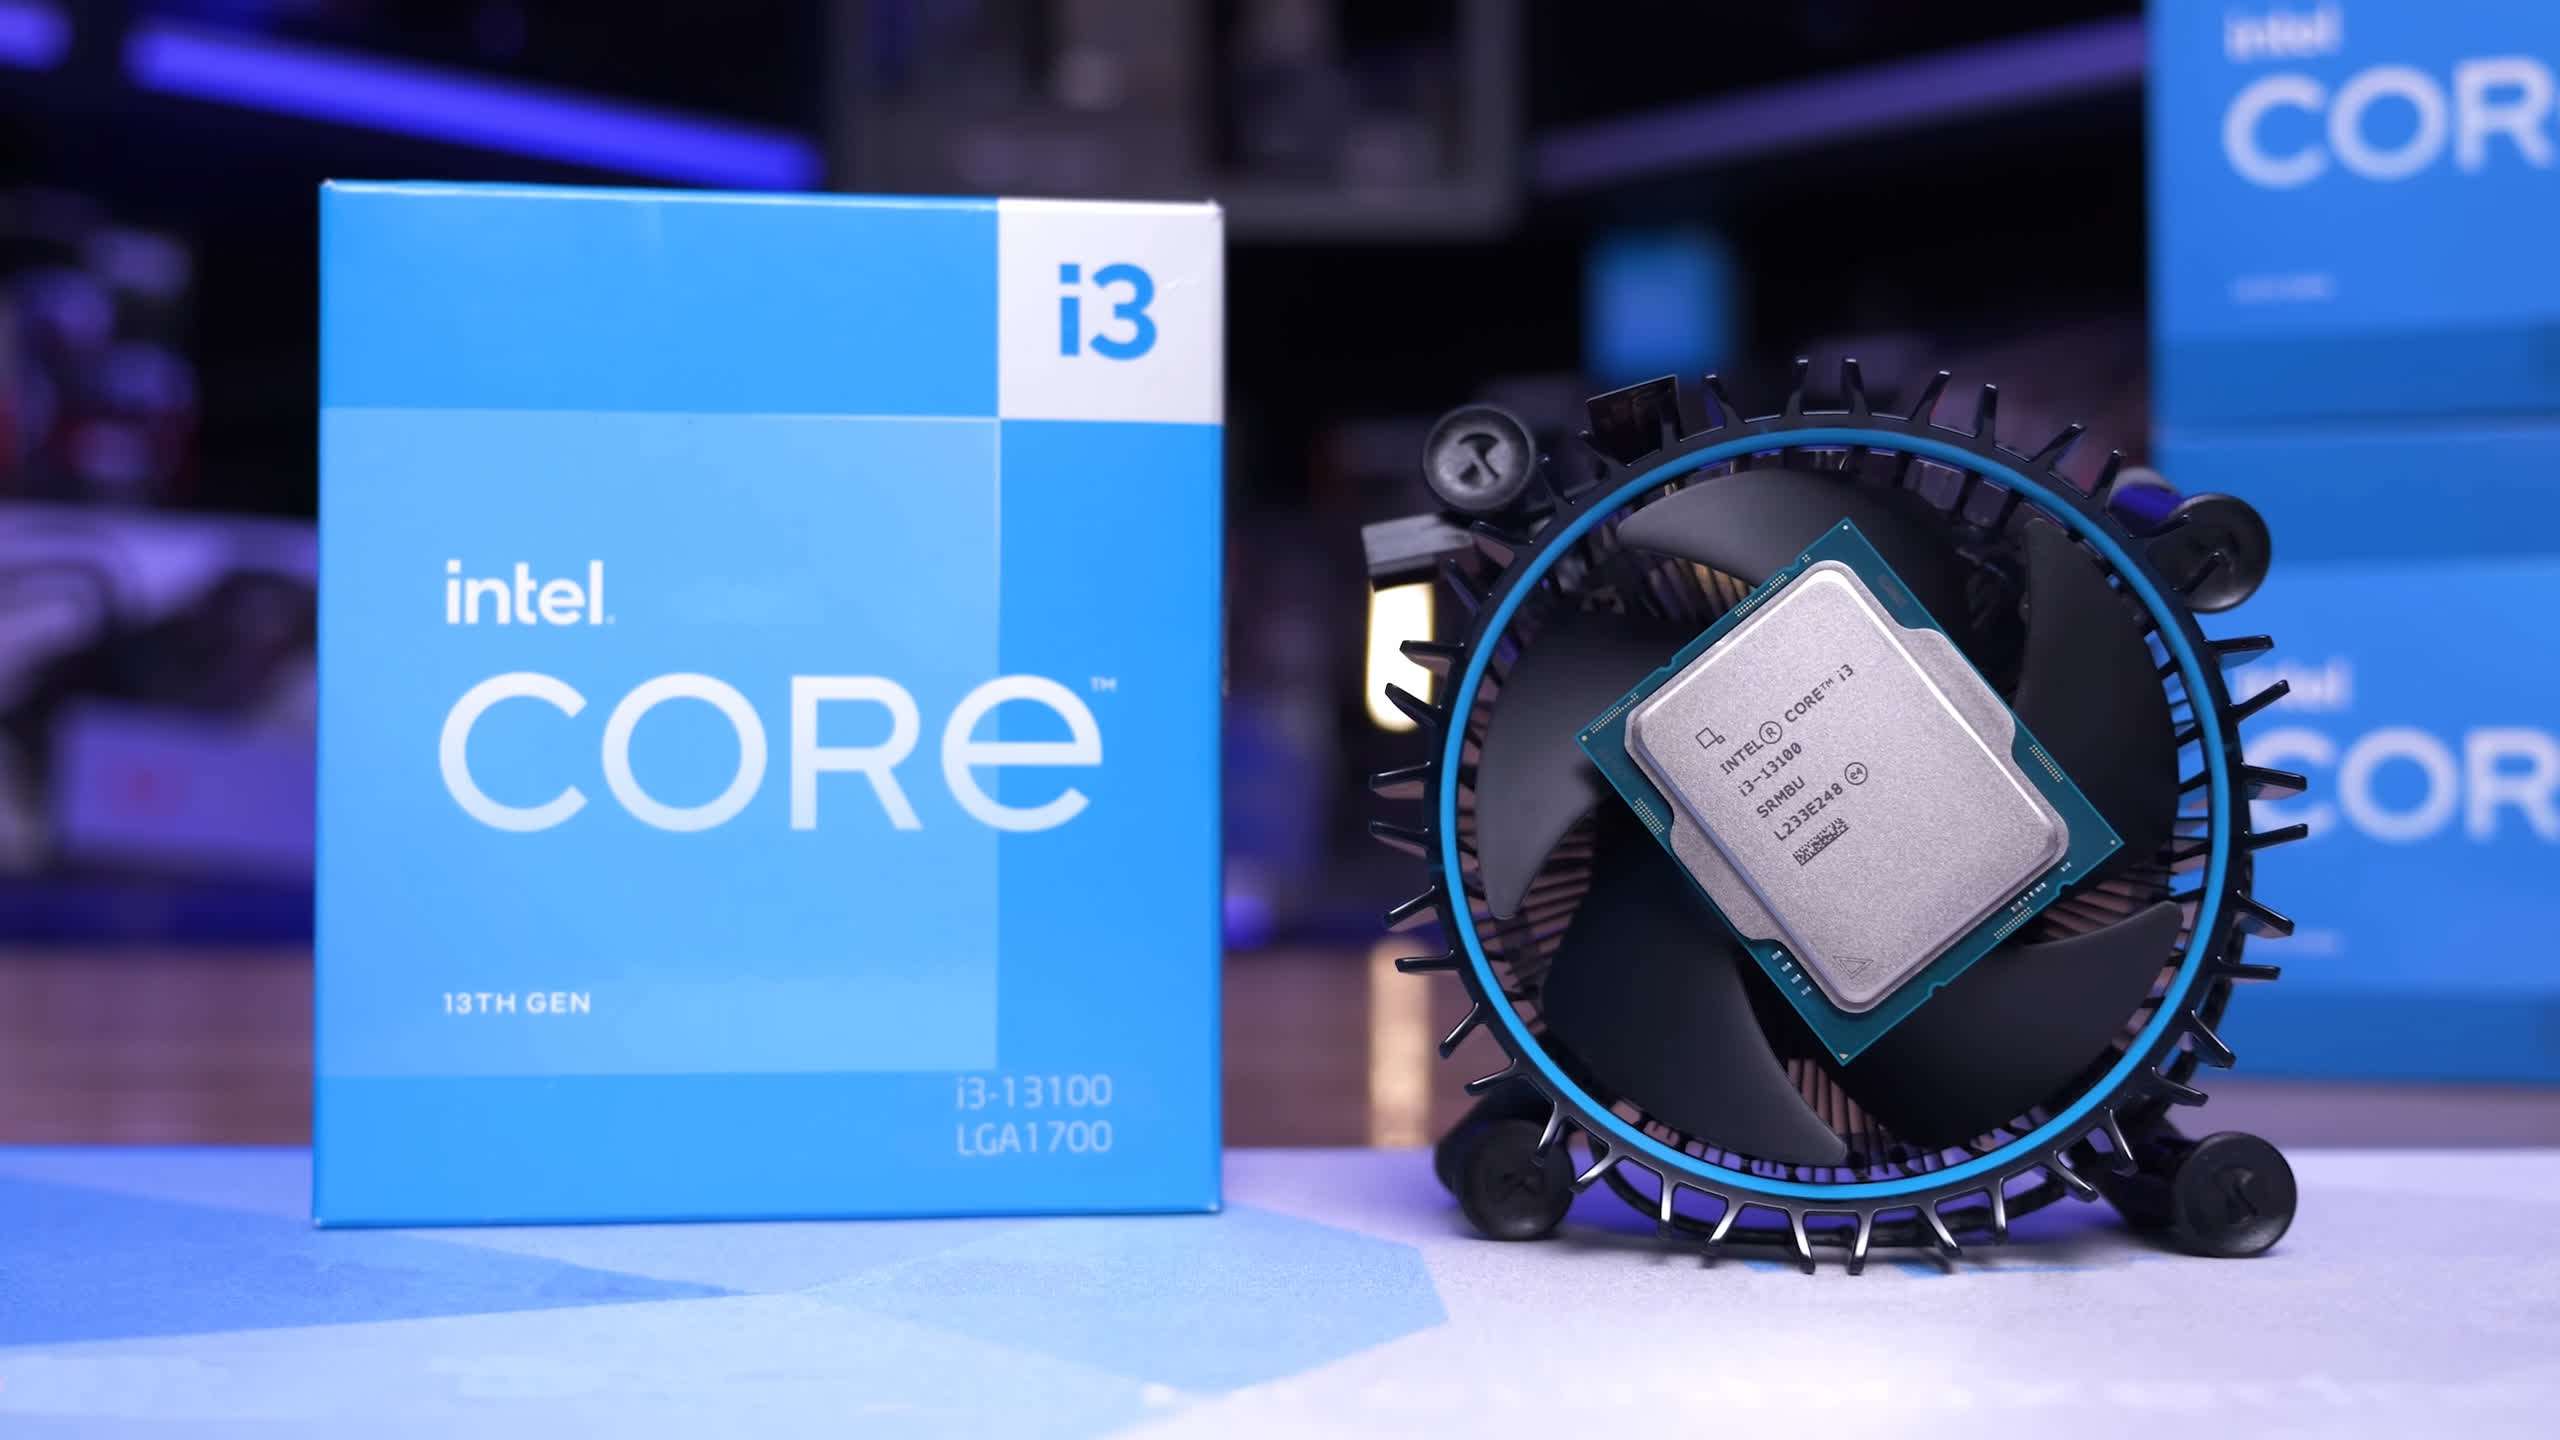 Intel Core I3-13100